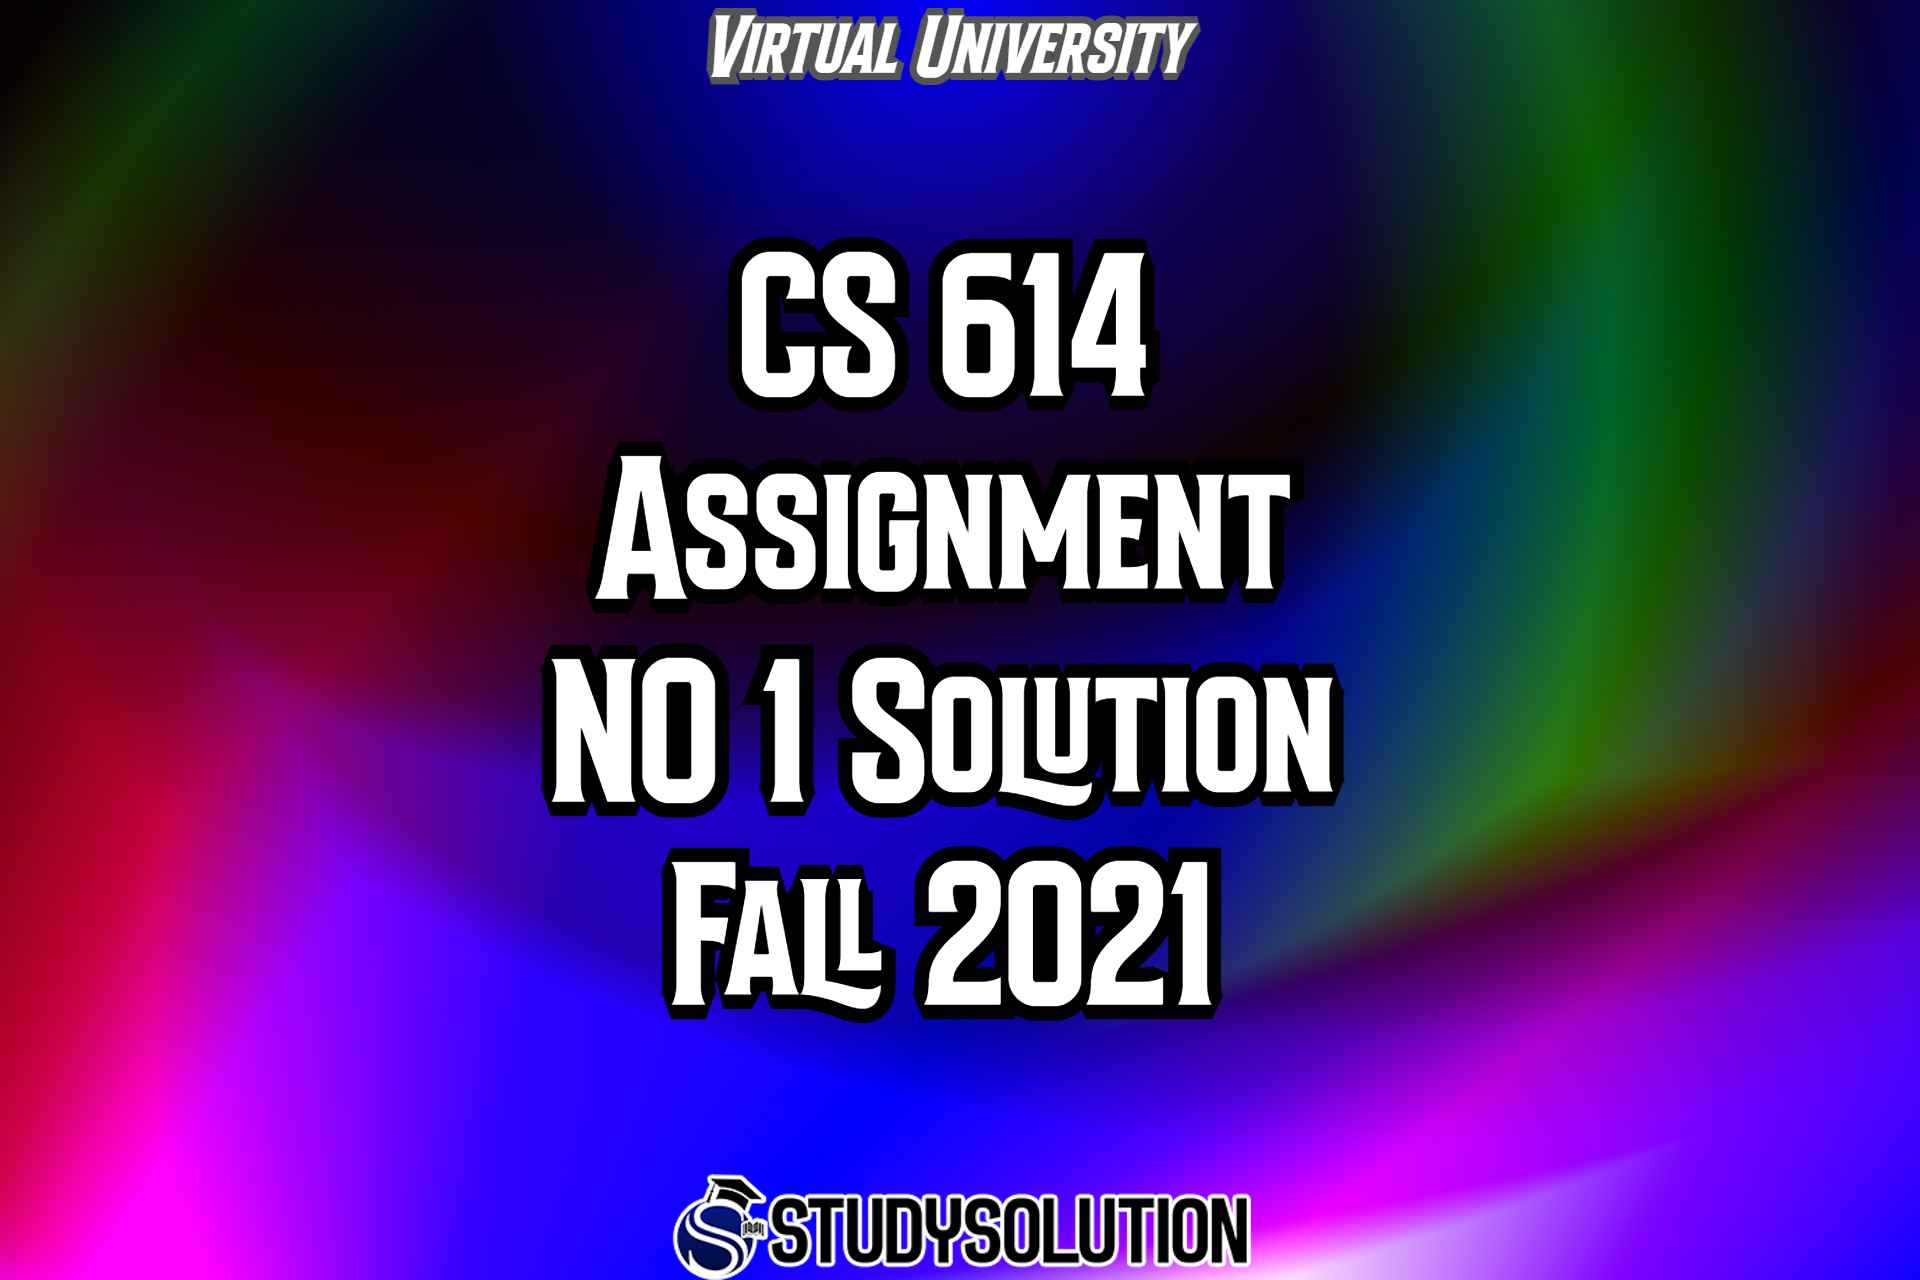 CS614 Assignment NO 1 Solution Fall 2021